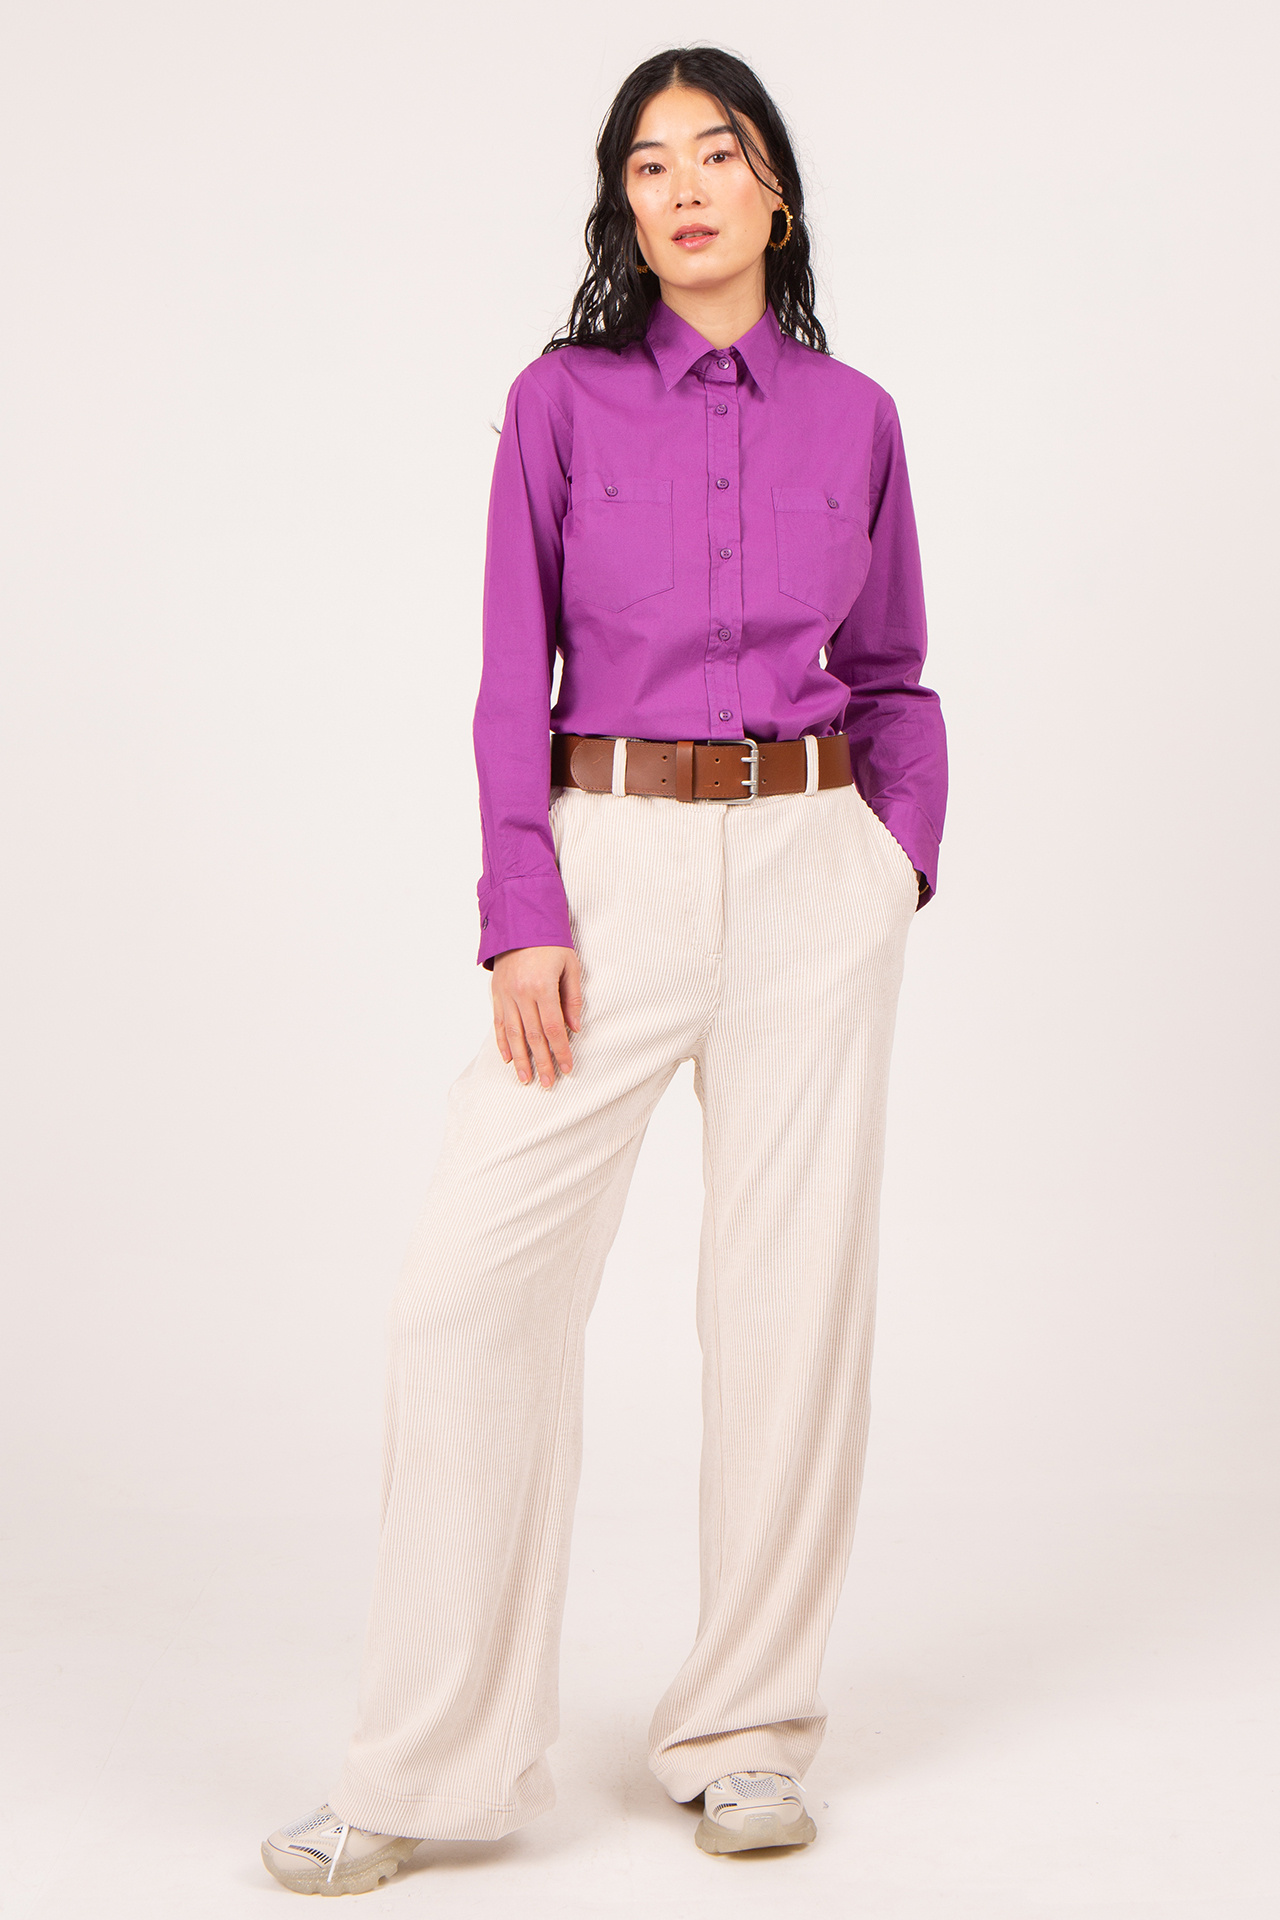 Buy Ansh Fashion Wear Men Regular fit Formal Shirt  Purple Online at Low  Prices in India  Paytmmallcom